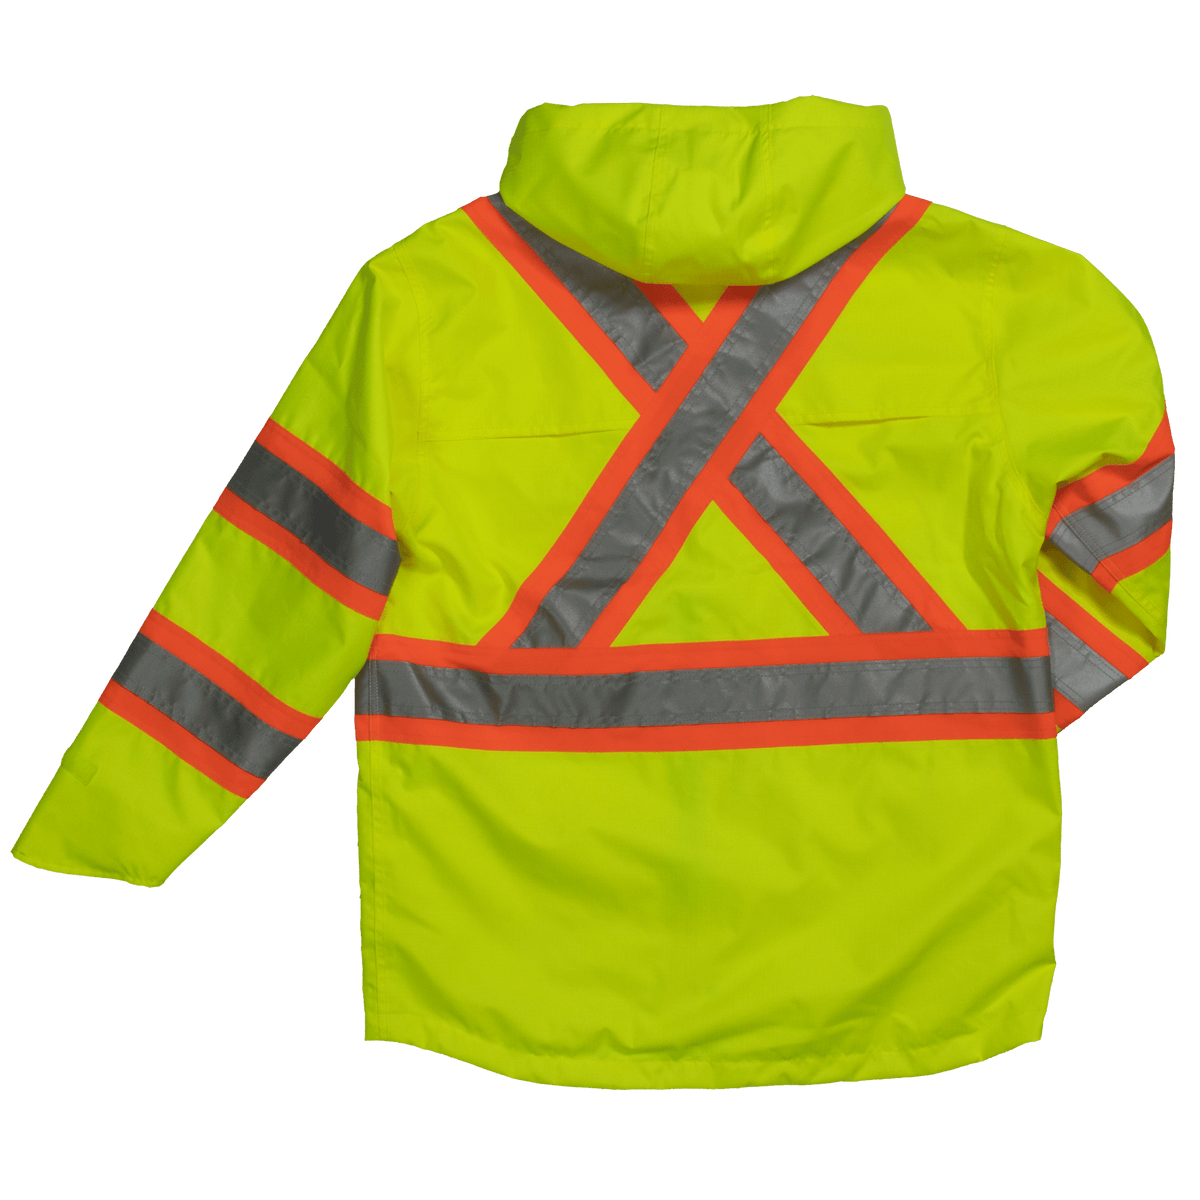 Tough Duck C3 Hi-Vis Waterproof Snap-Front Safety Rain Jacket - Work World - Workwear, Work Boots, Safety Gear